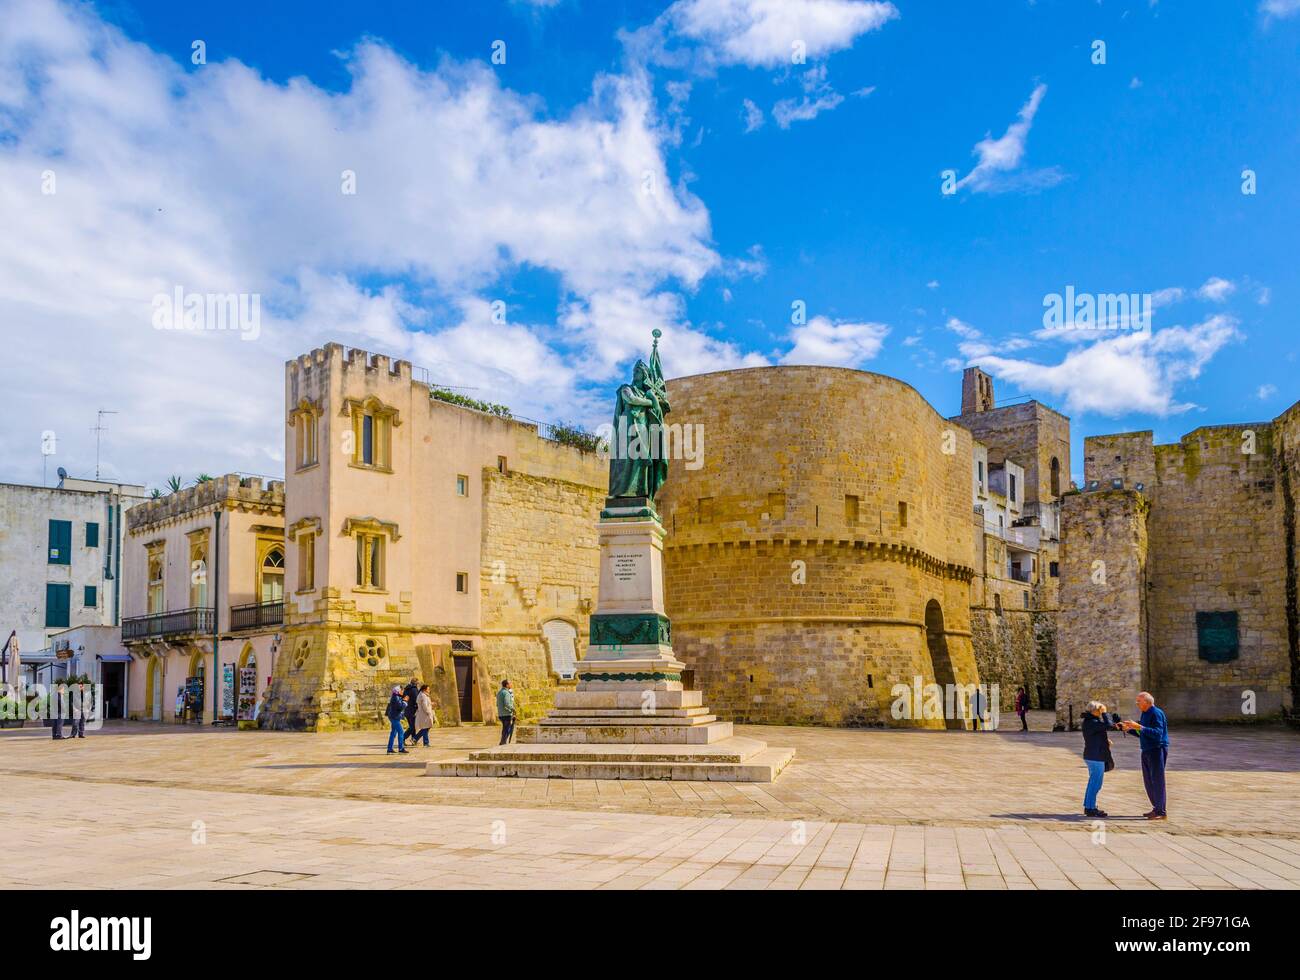 Ansicht eines Schlosses in Otranto, Italien. Stockfoto